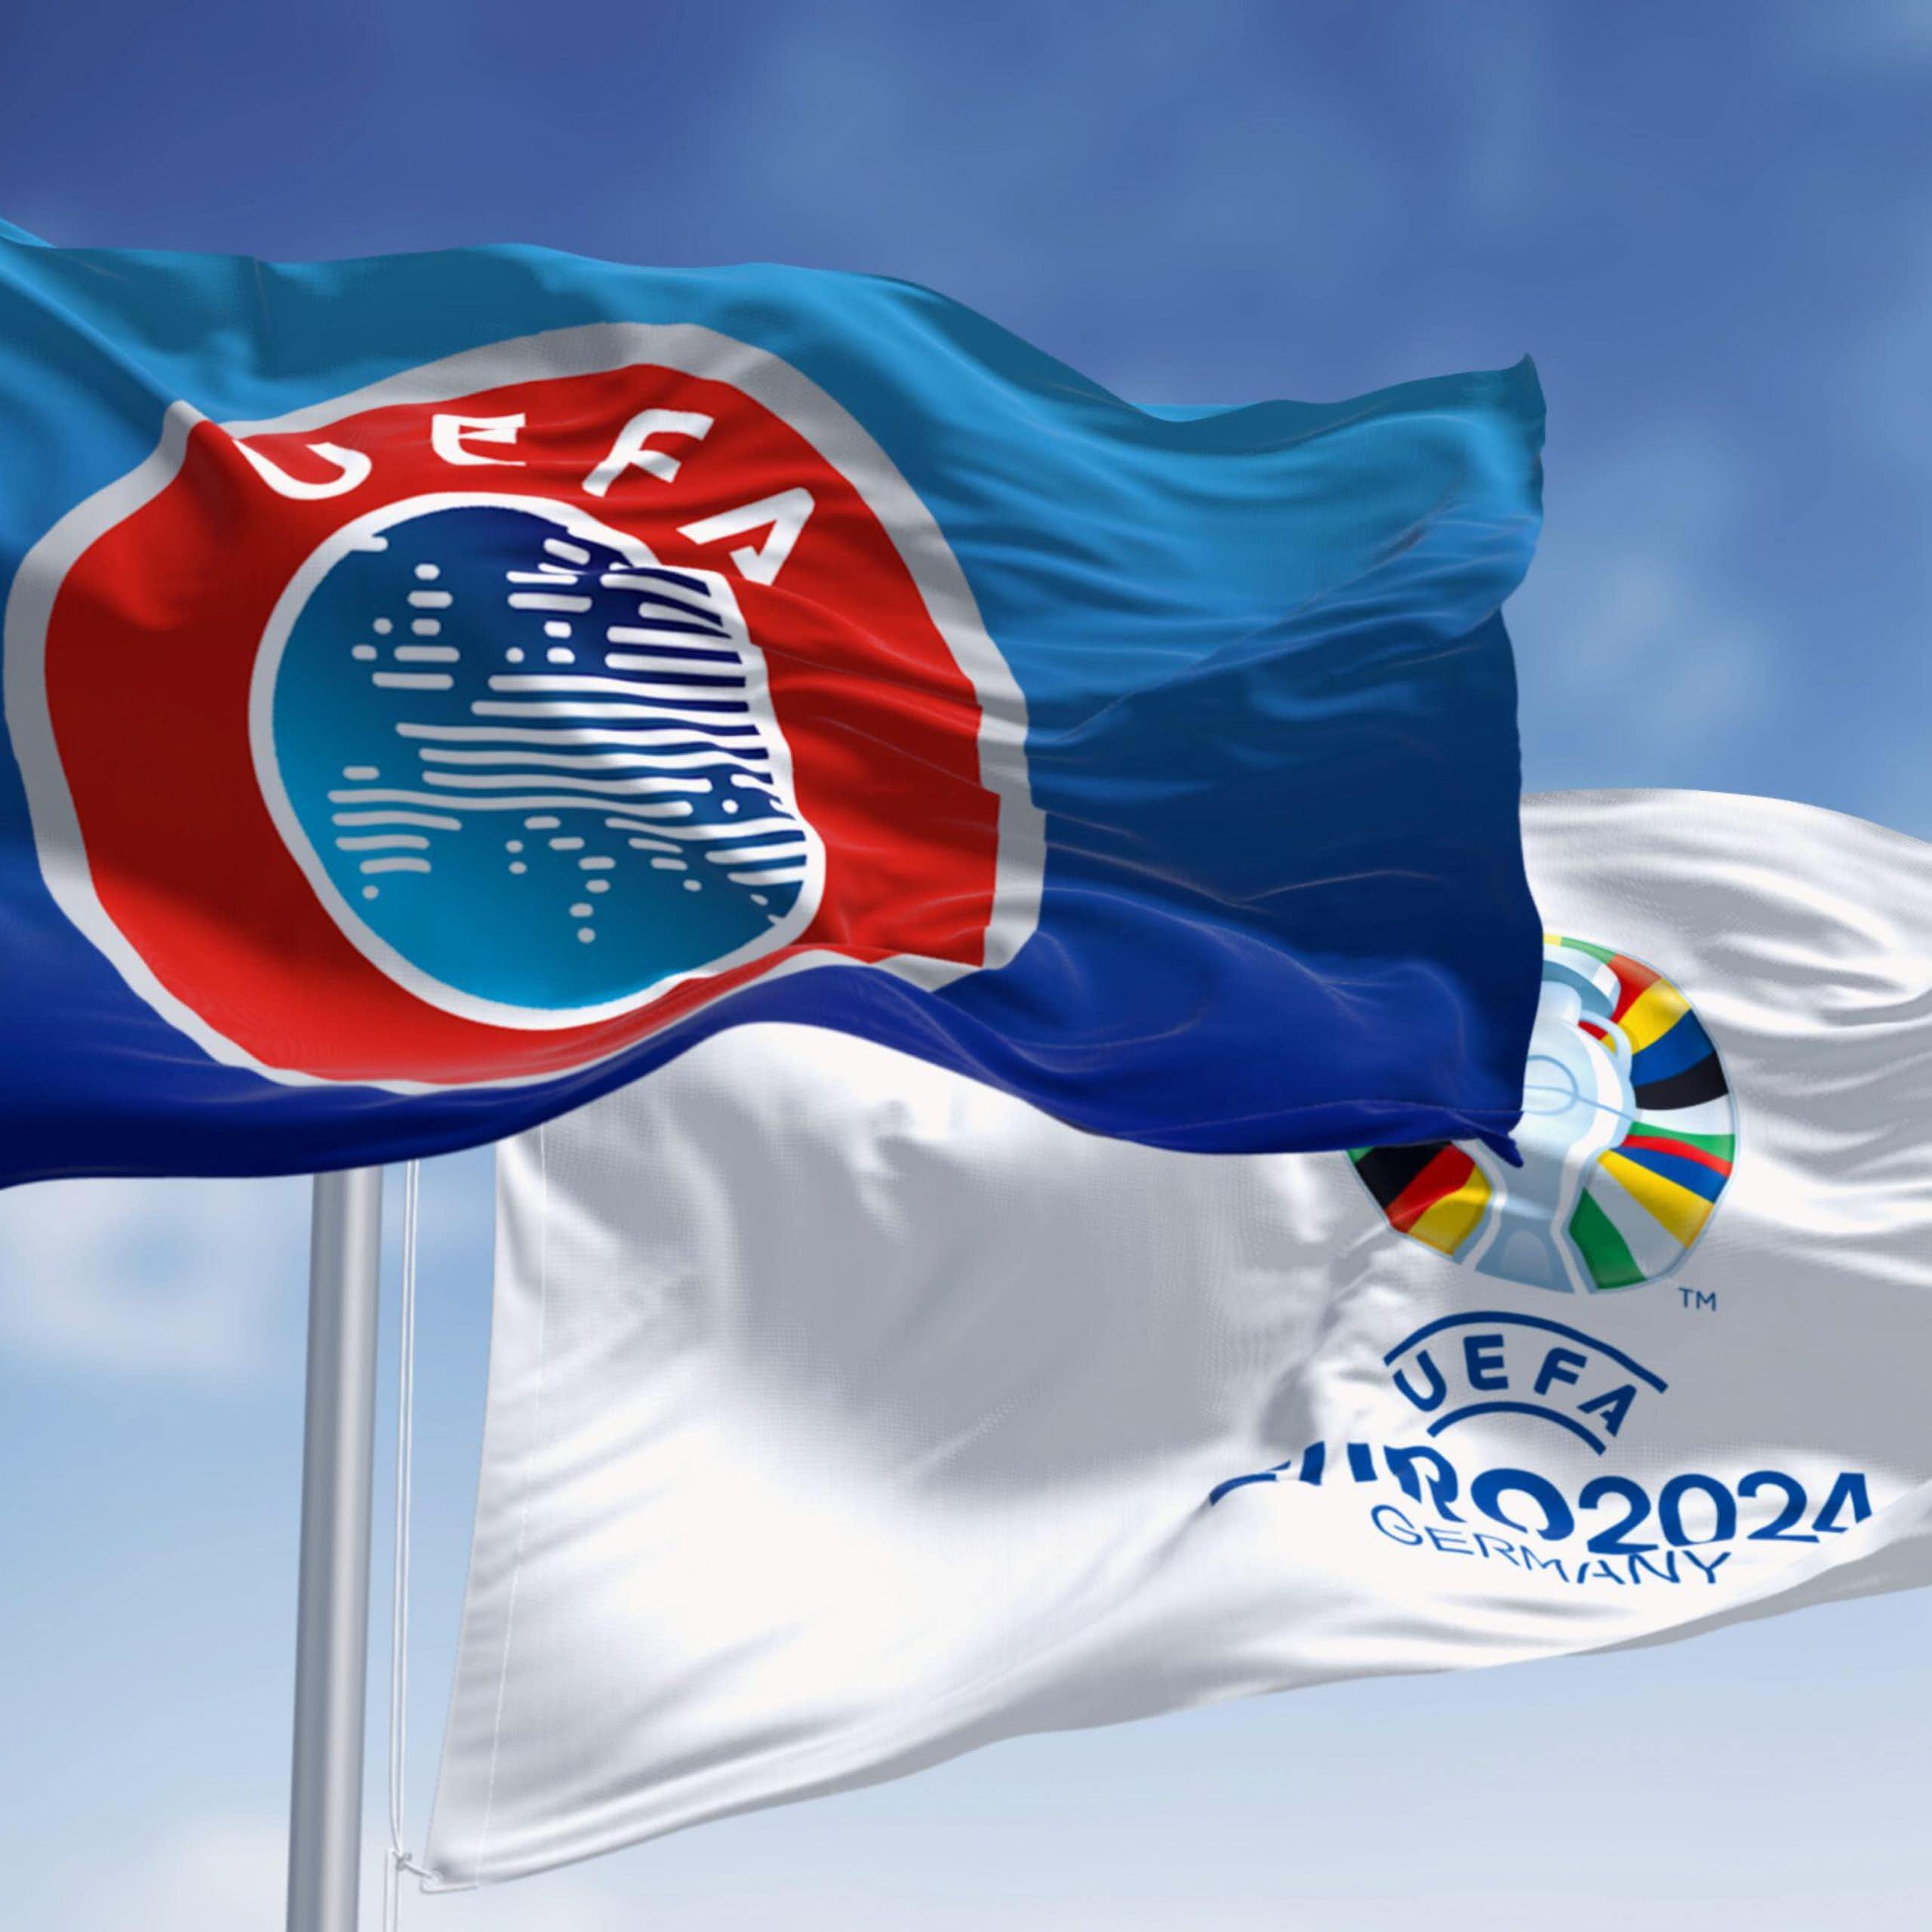 A Uefa flag and a Euro 2024 flag flying against a blue sky.